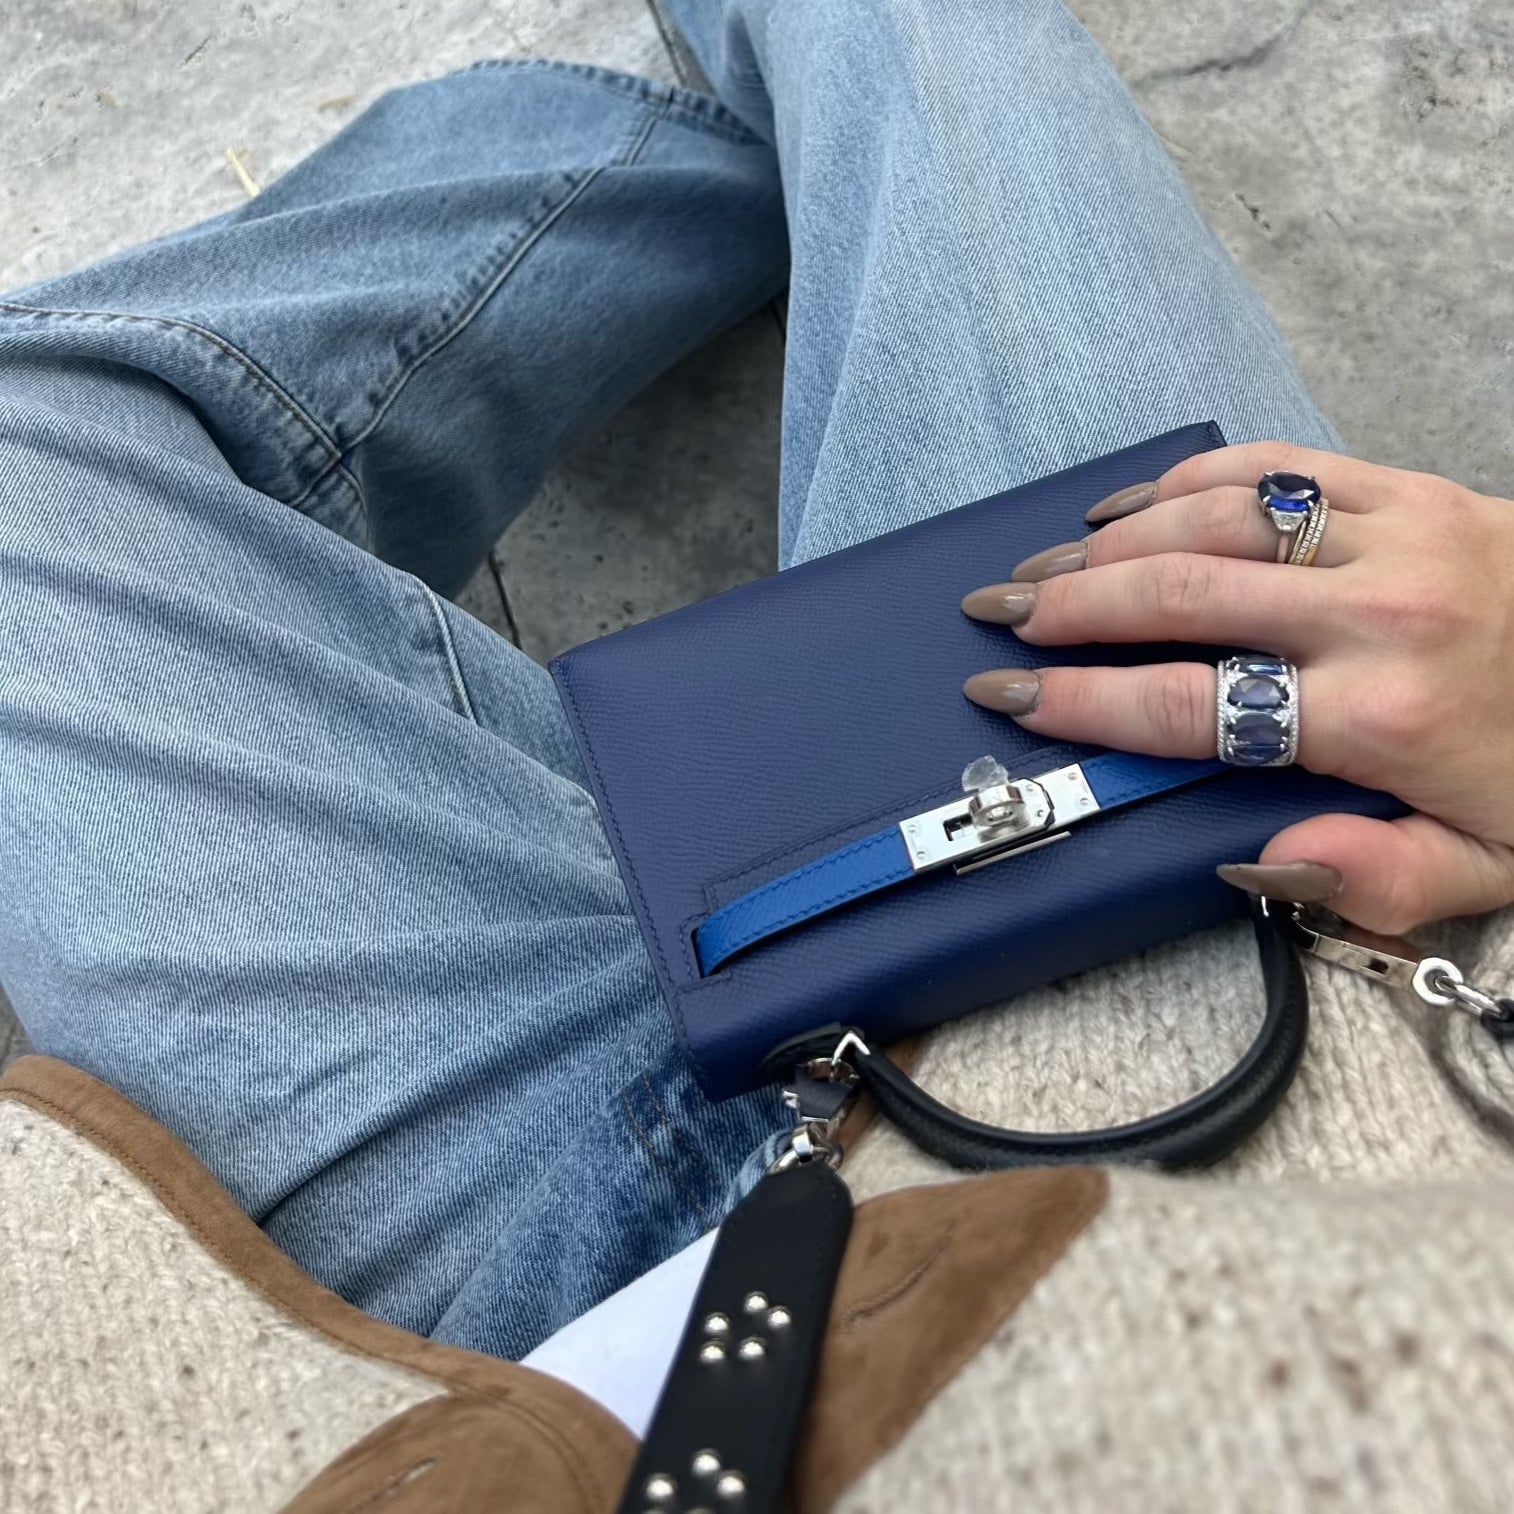 Hermès Tricolor Mini Kelly 20 Bleu Saphir, France, and Black Epsom Palladium Hardware